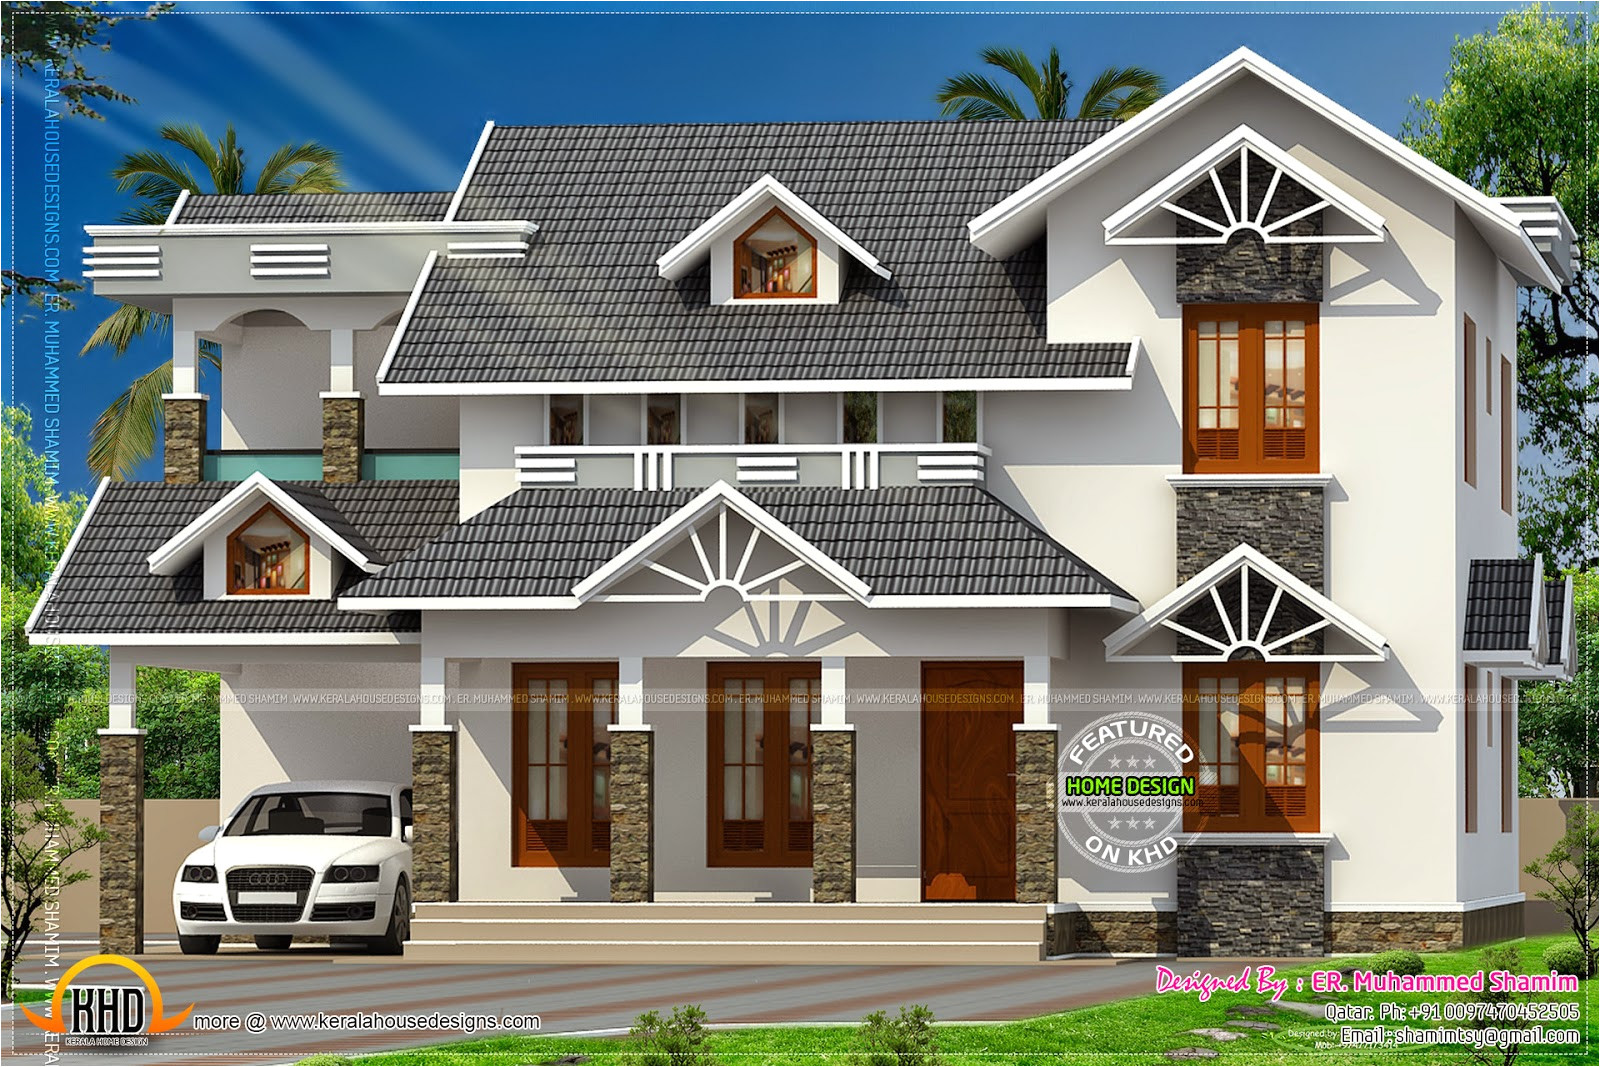 nice sloped roof kerala home design